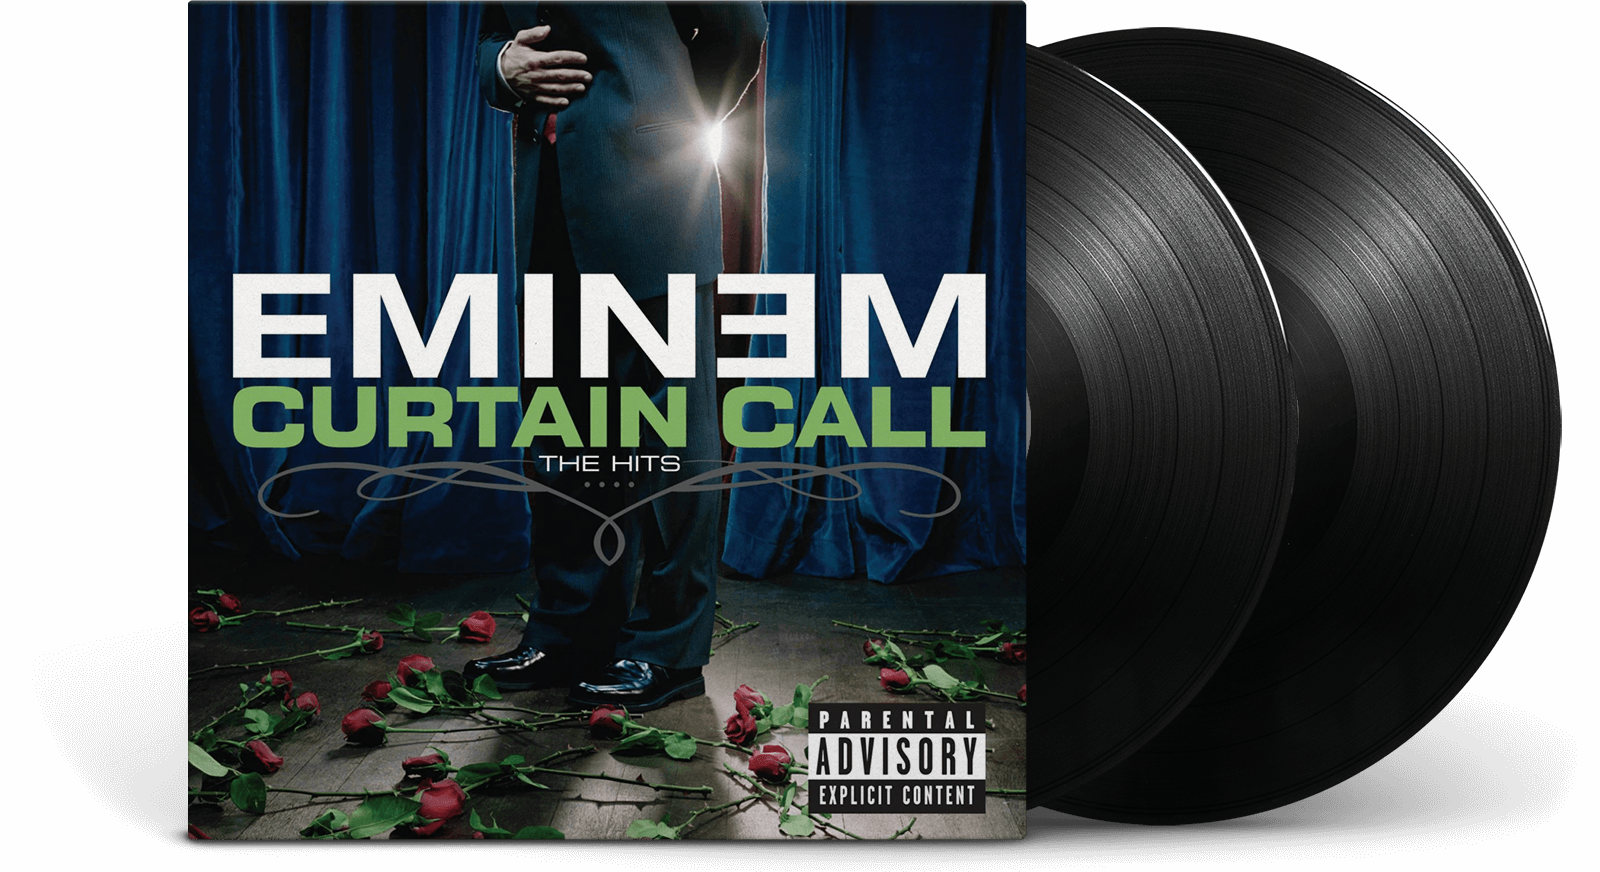 Eminem curtain call. Curtain Call: the Hits Эминем. Виниловая пластинка Eminem. Curtain Call Эминем.